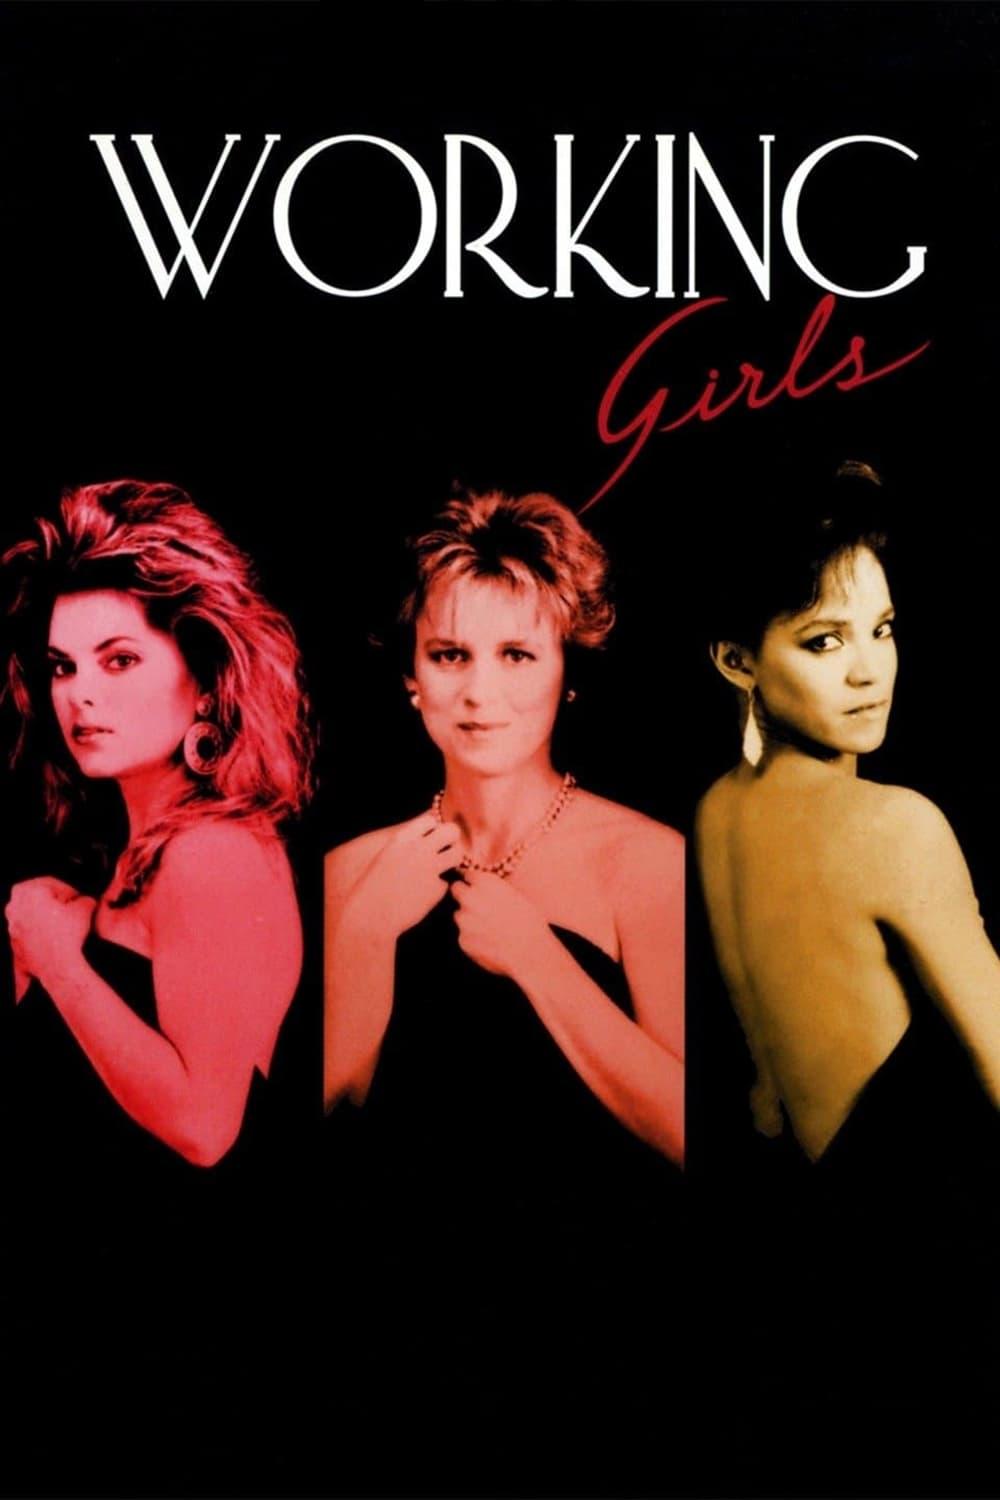 Working Girls poster